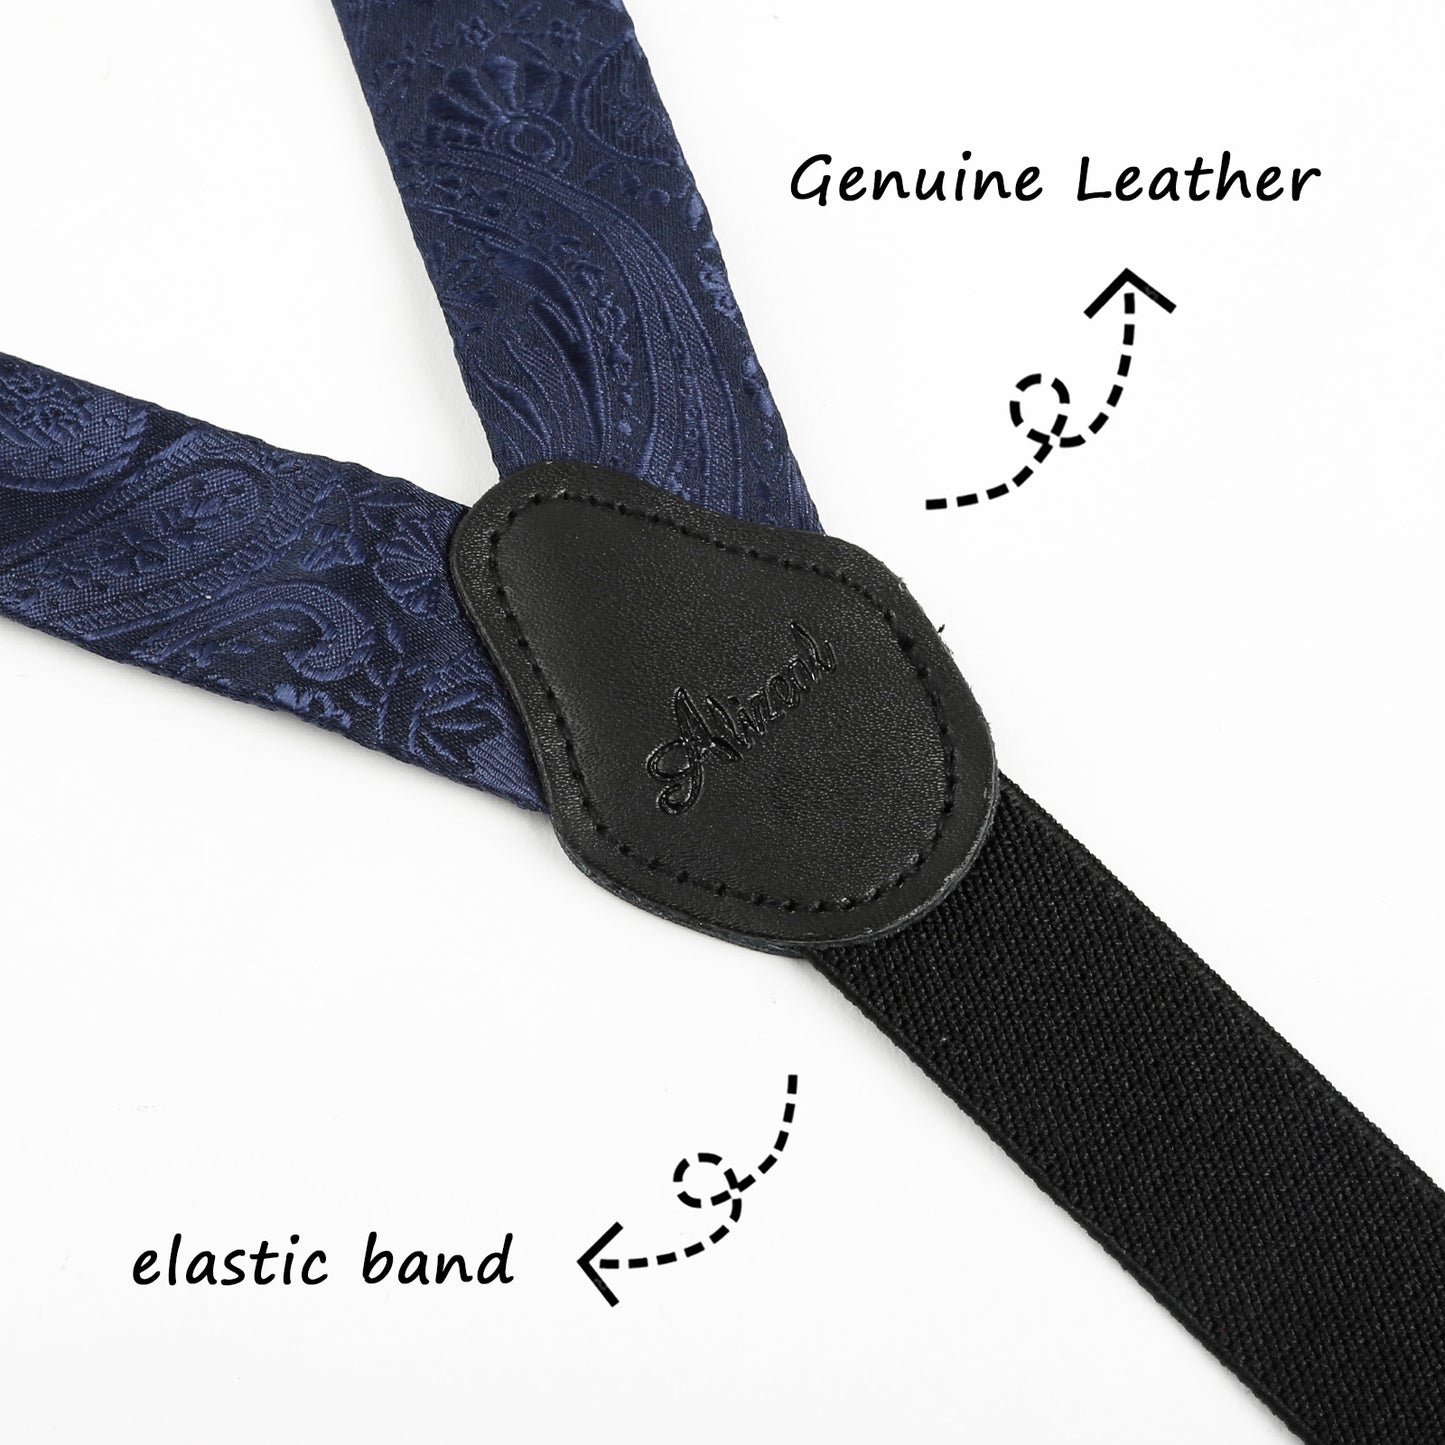 Boy's Adjustable Classic Paisley Pre-tied Bow Tie and Elastic Y Shape 3 Clips Suspenders Set, BD070